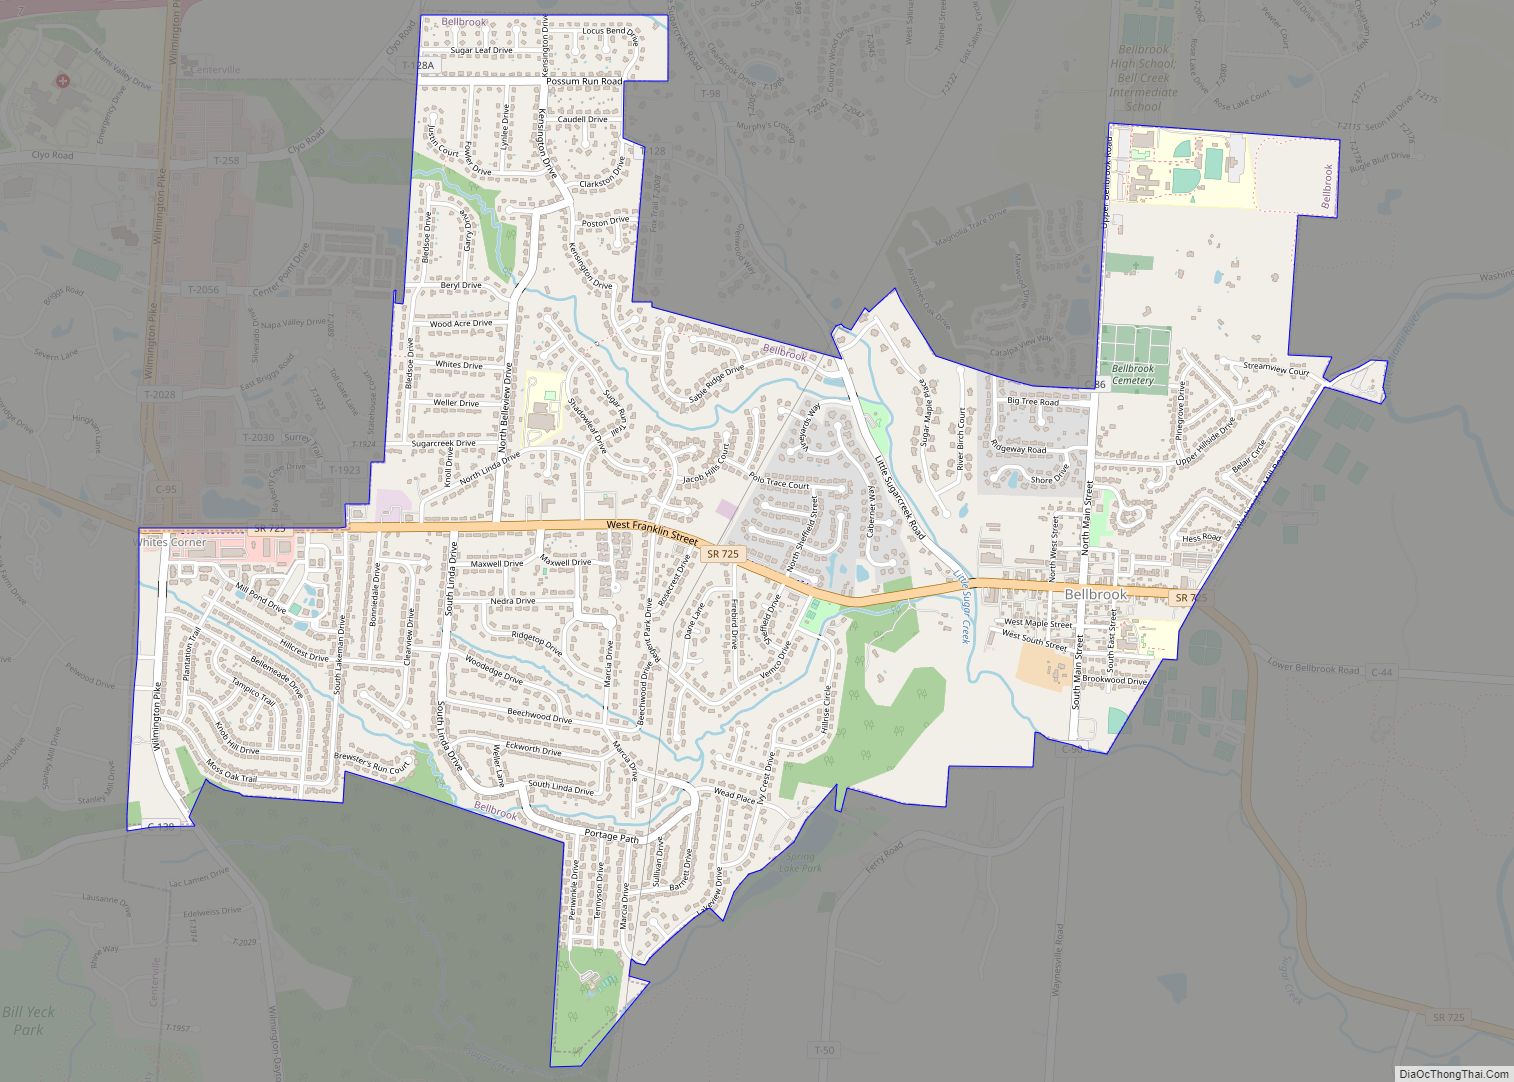 Map of Bellbrook city